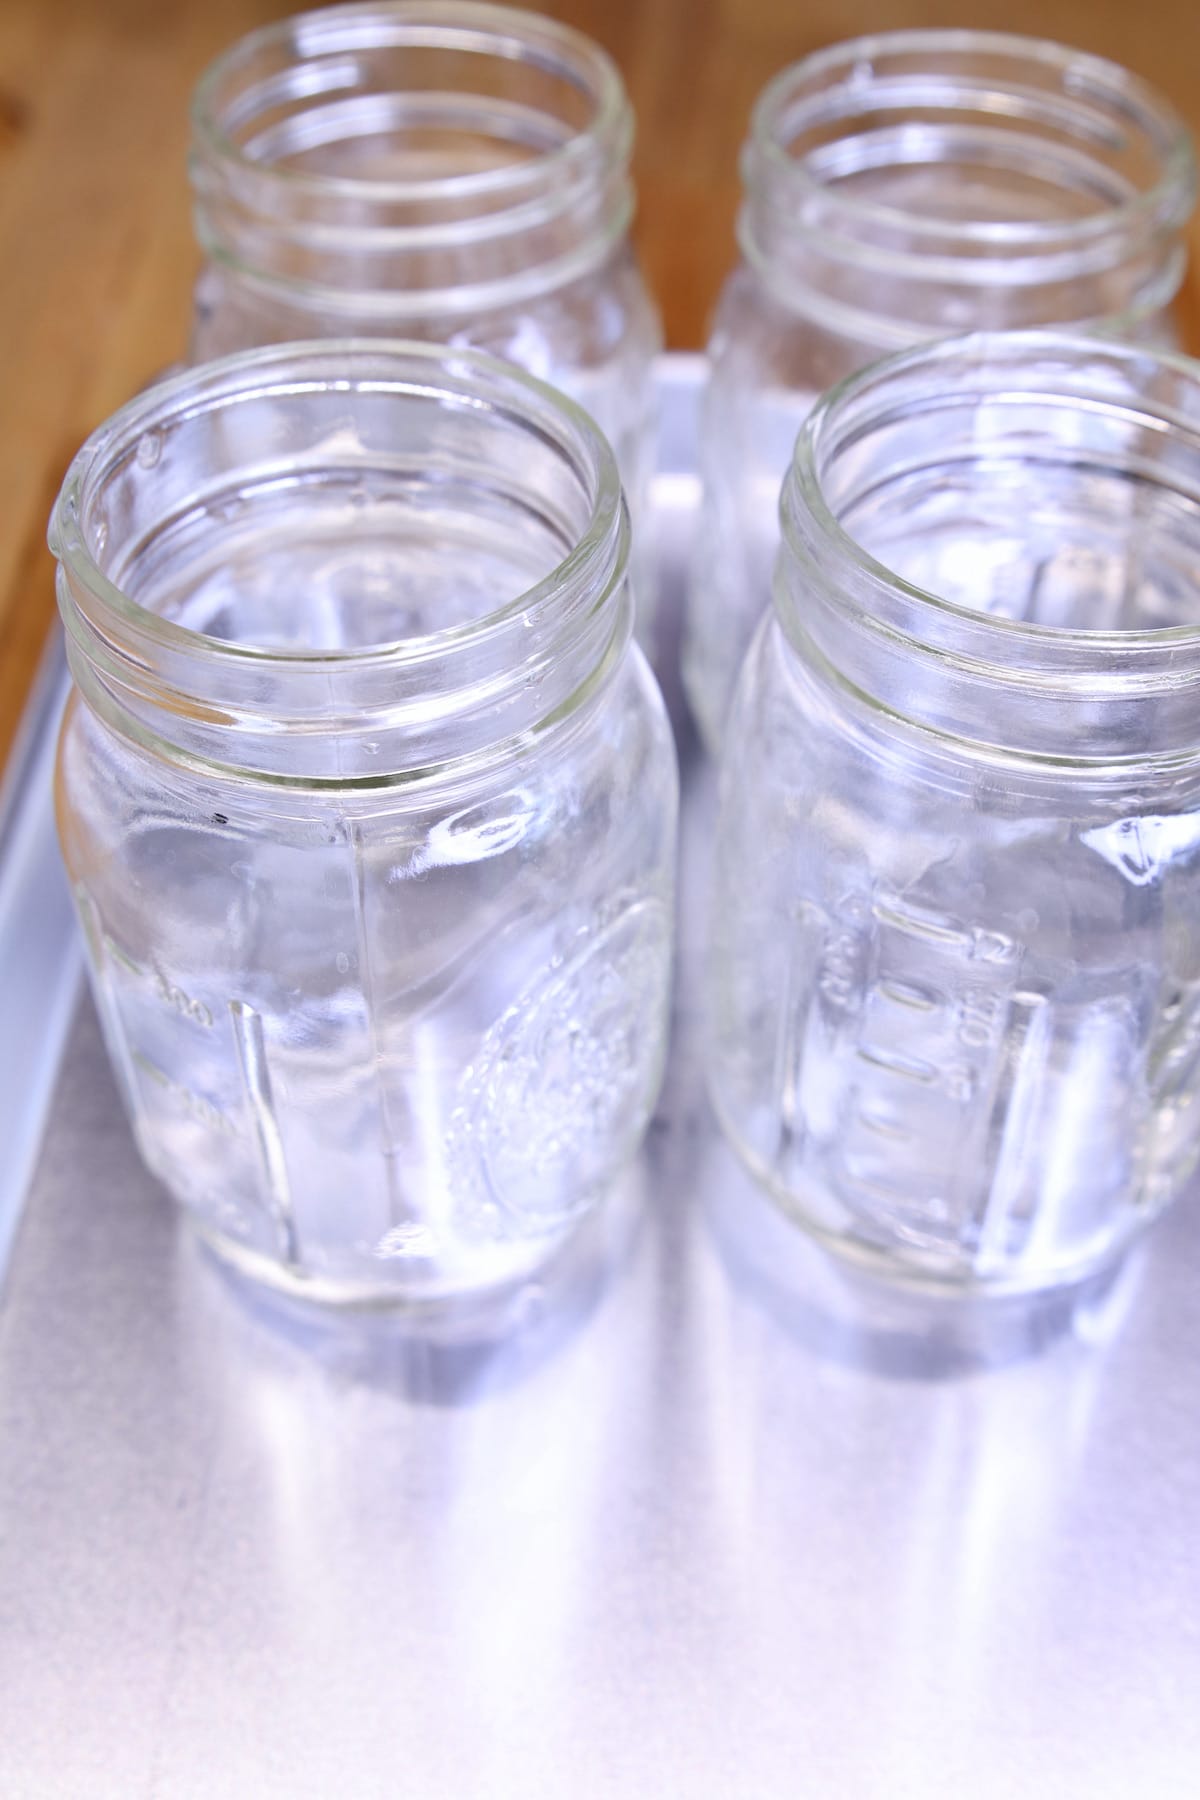 Pint jars on a baking sheet.